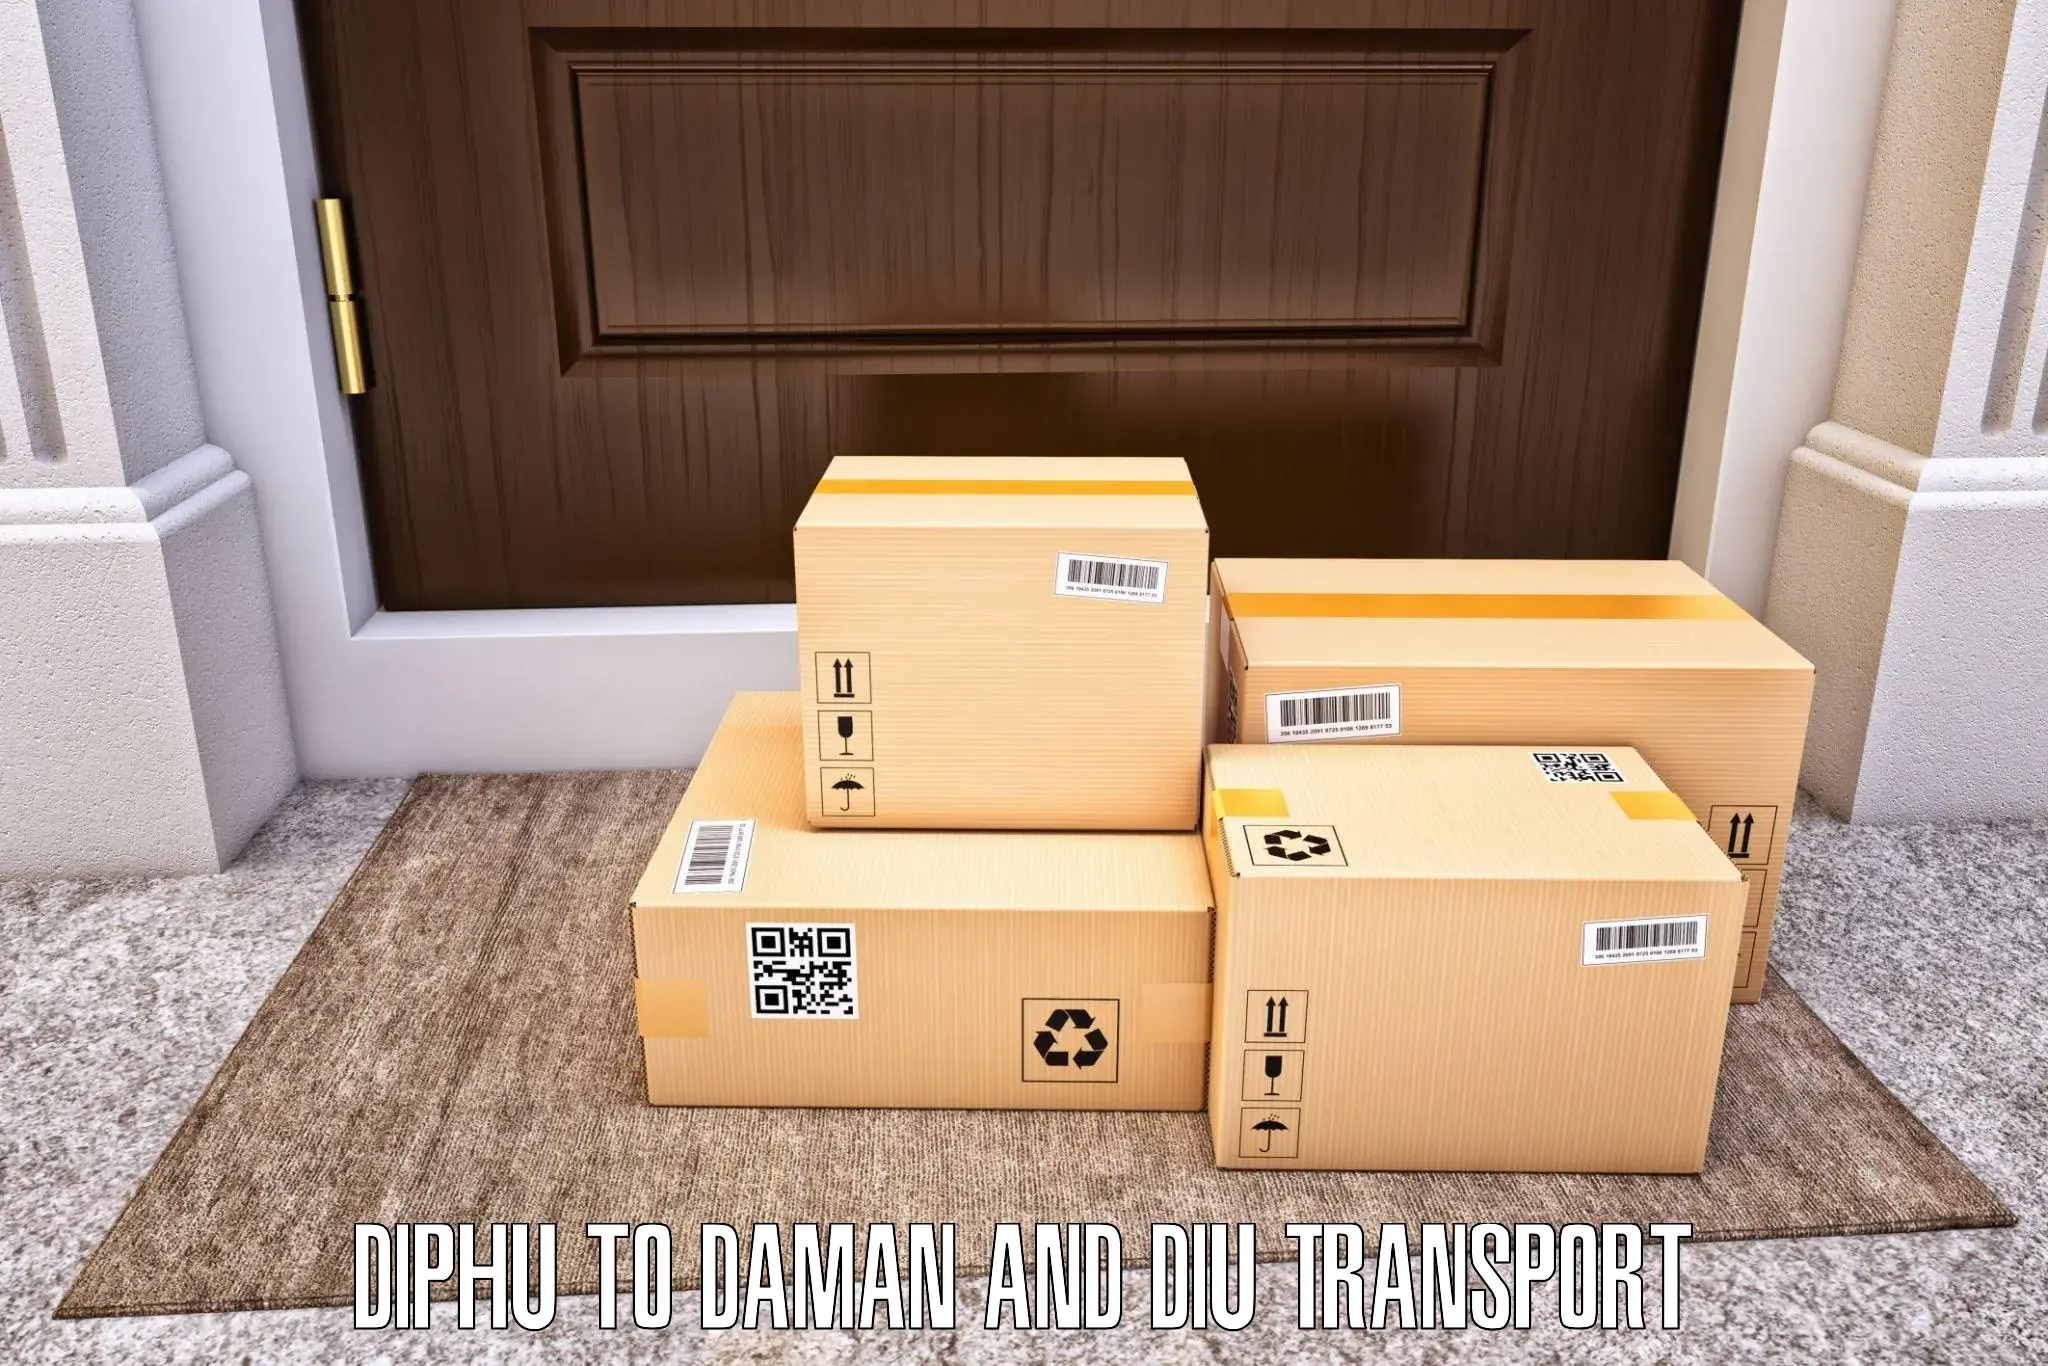 Transport shared services Diphu to Daman and Diu